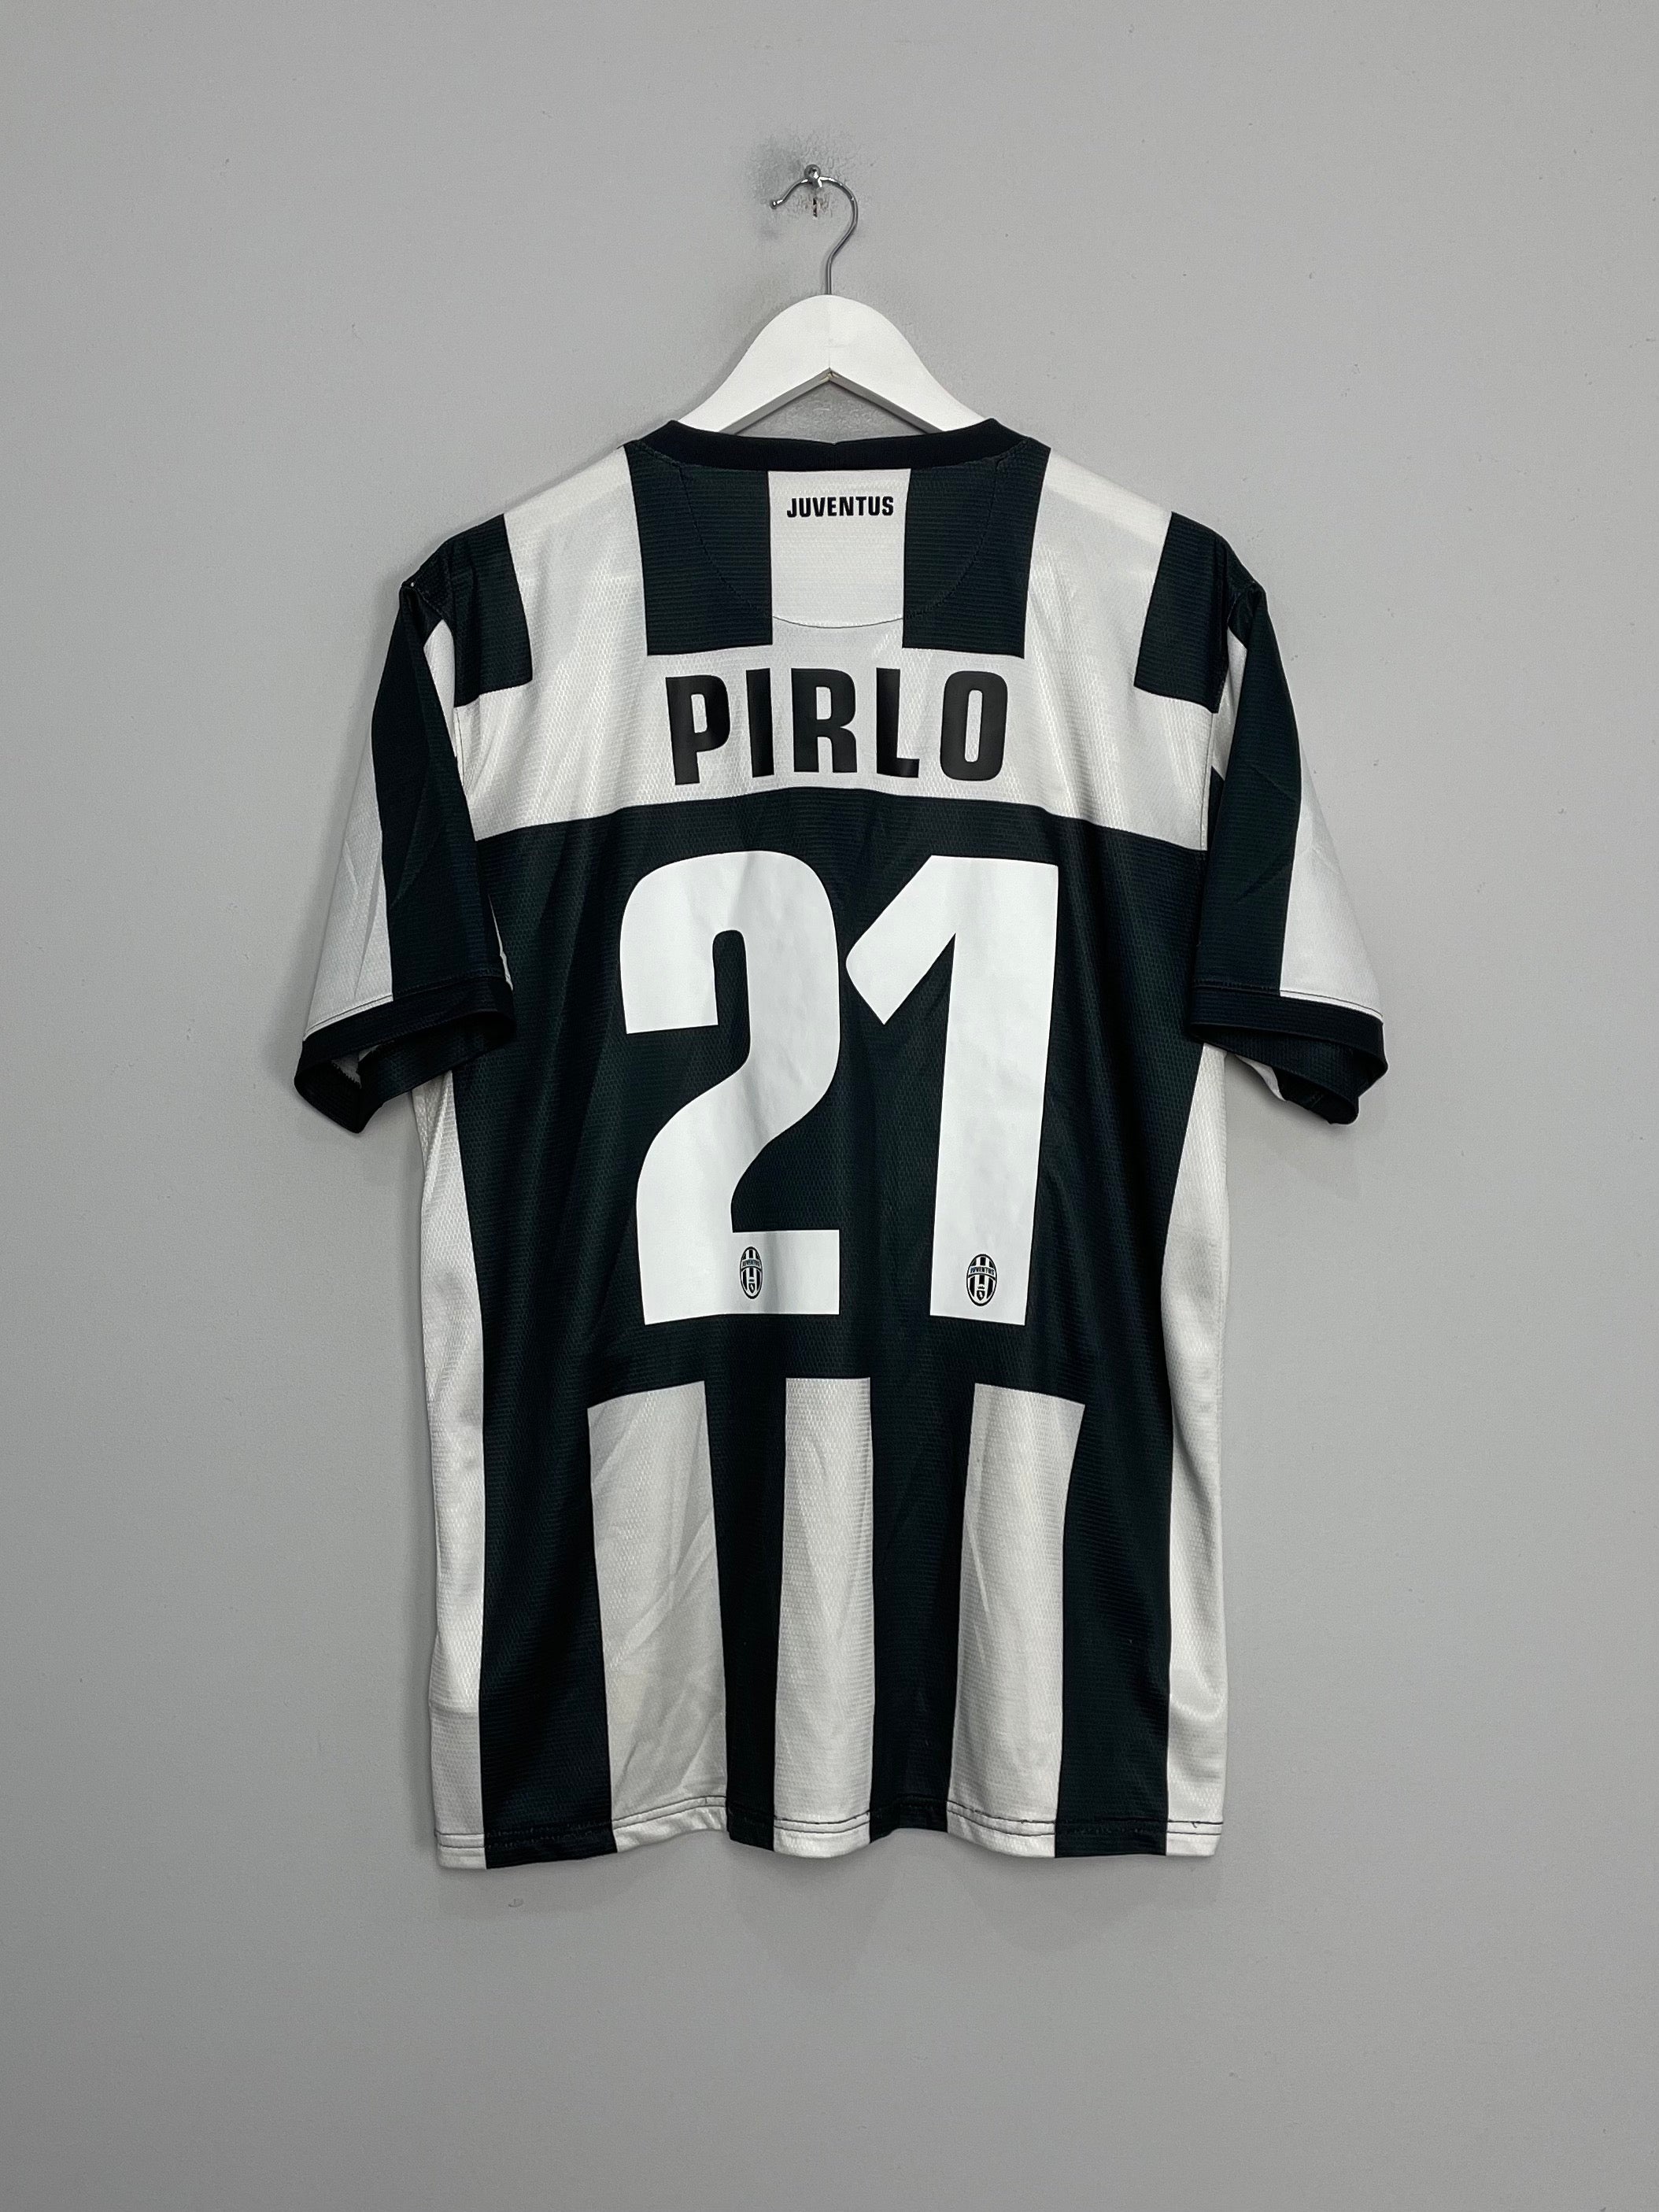 Juventus No21 Pirlo Home Jersey